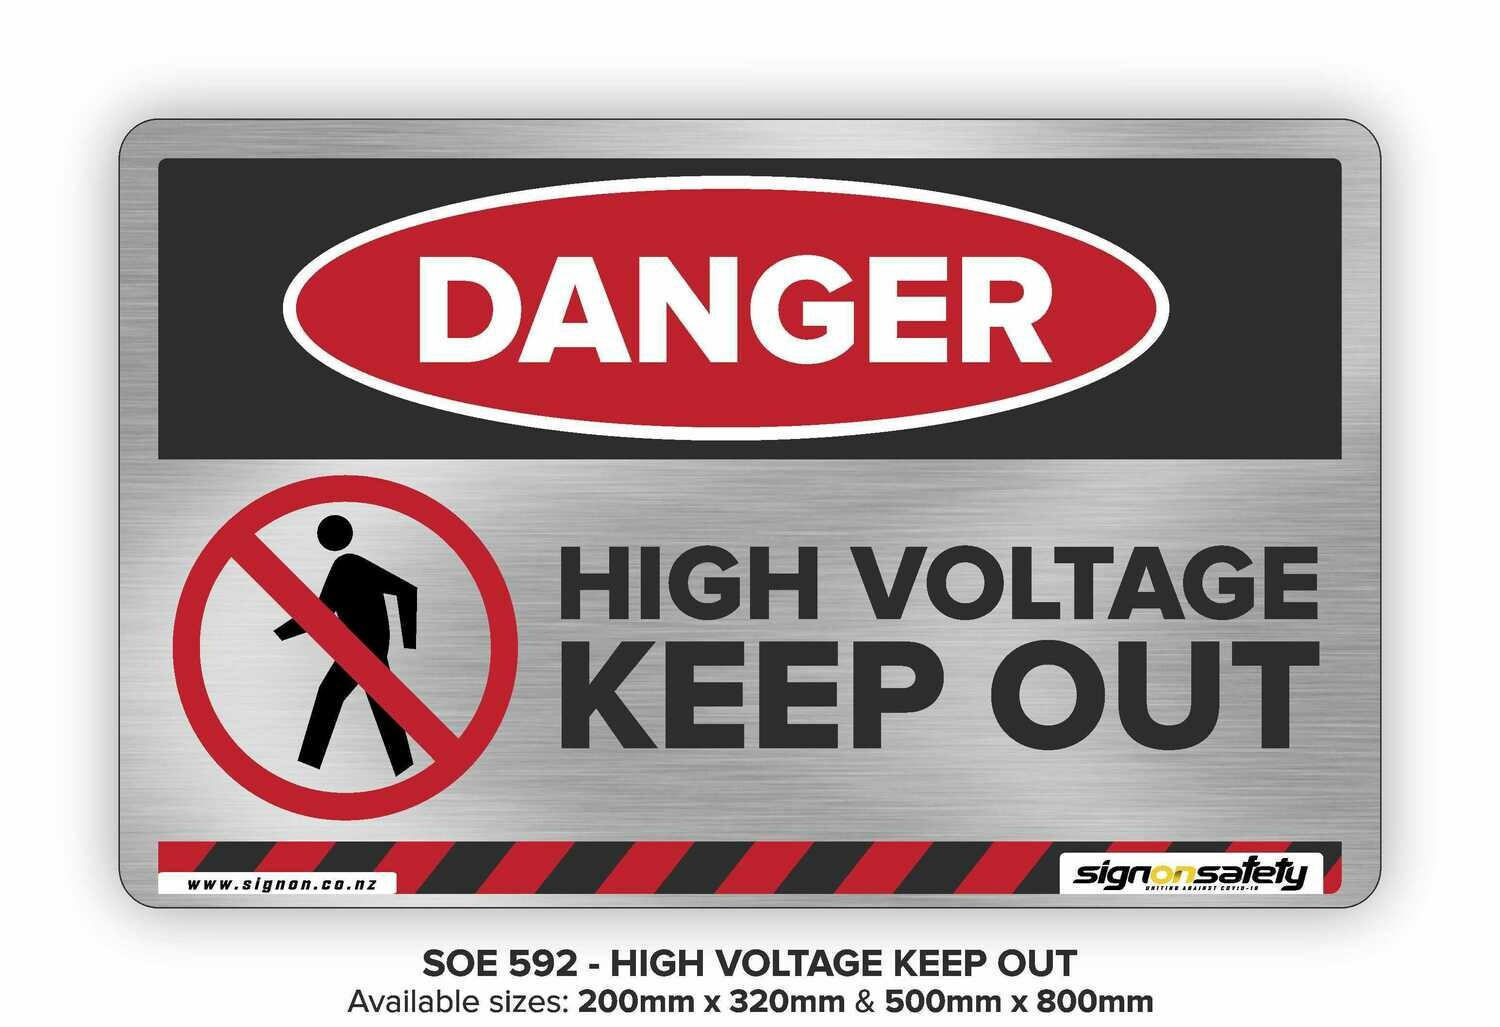 Danger - High Voltage Keep Out